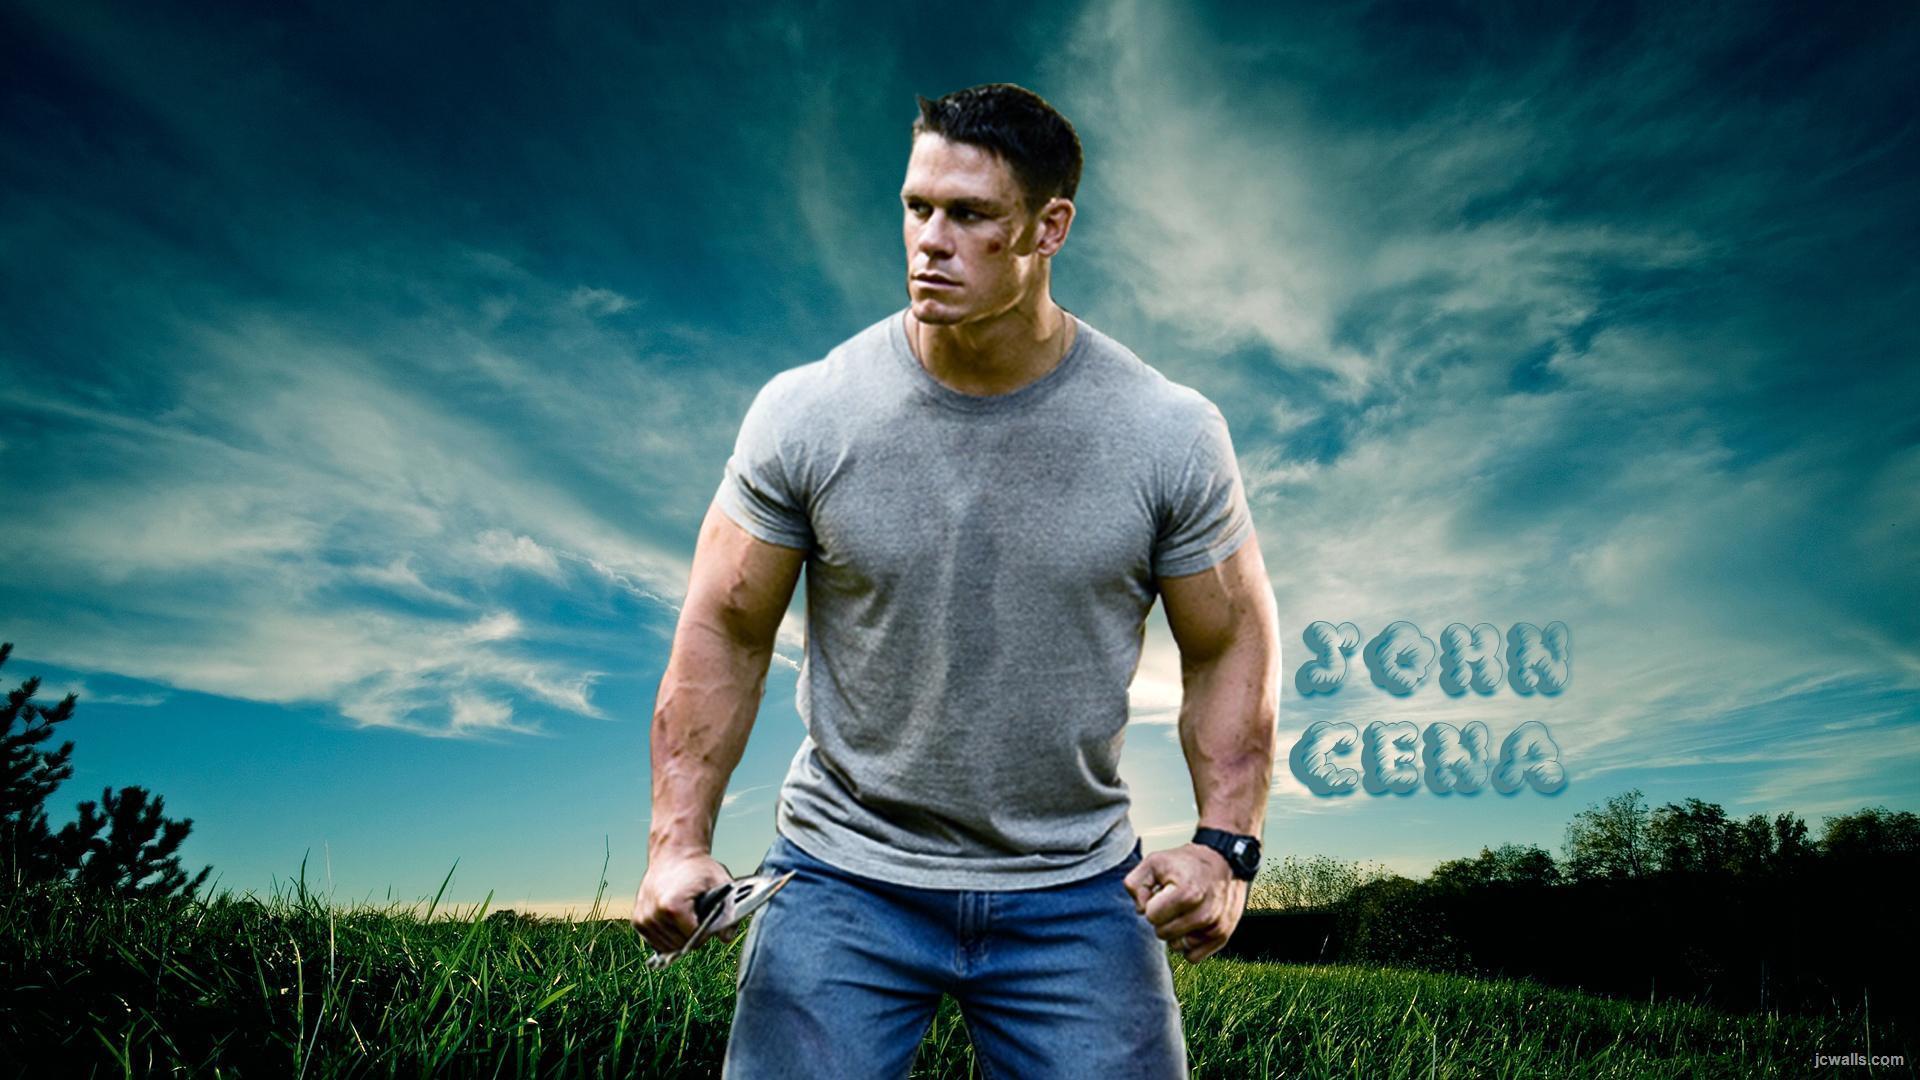 John Cena HD Wallpaper And Image 2015 (13) Wallpaper Free 2015